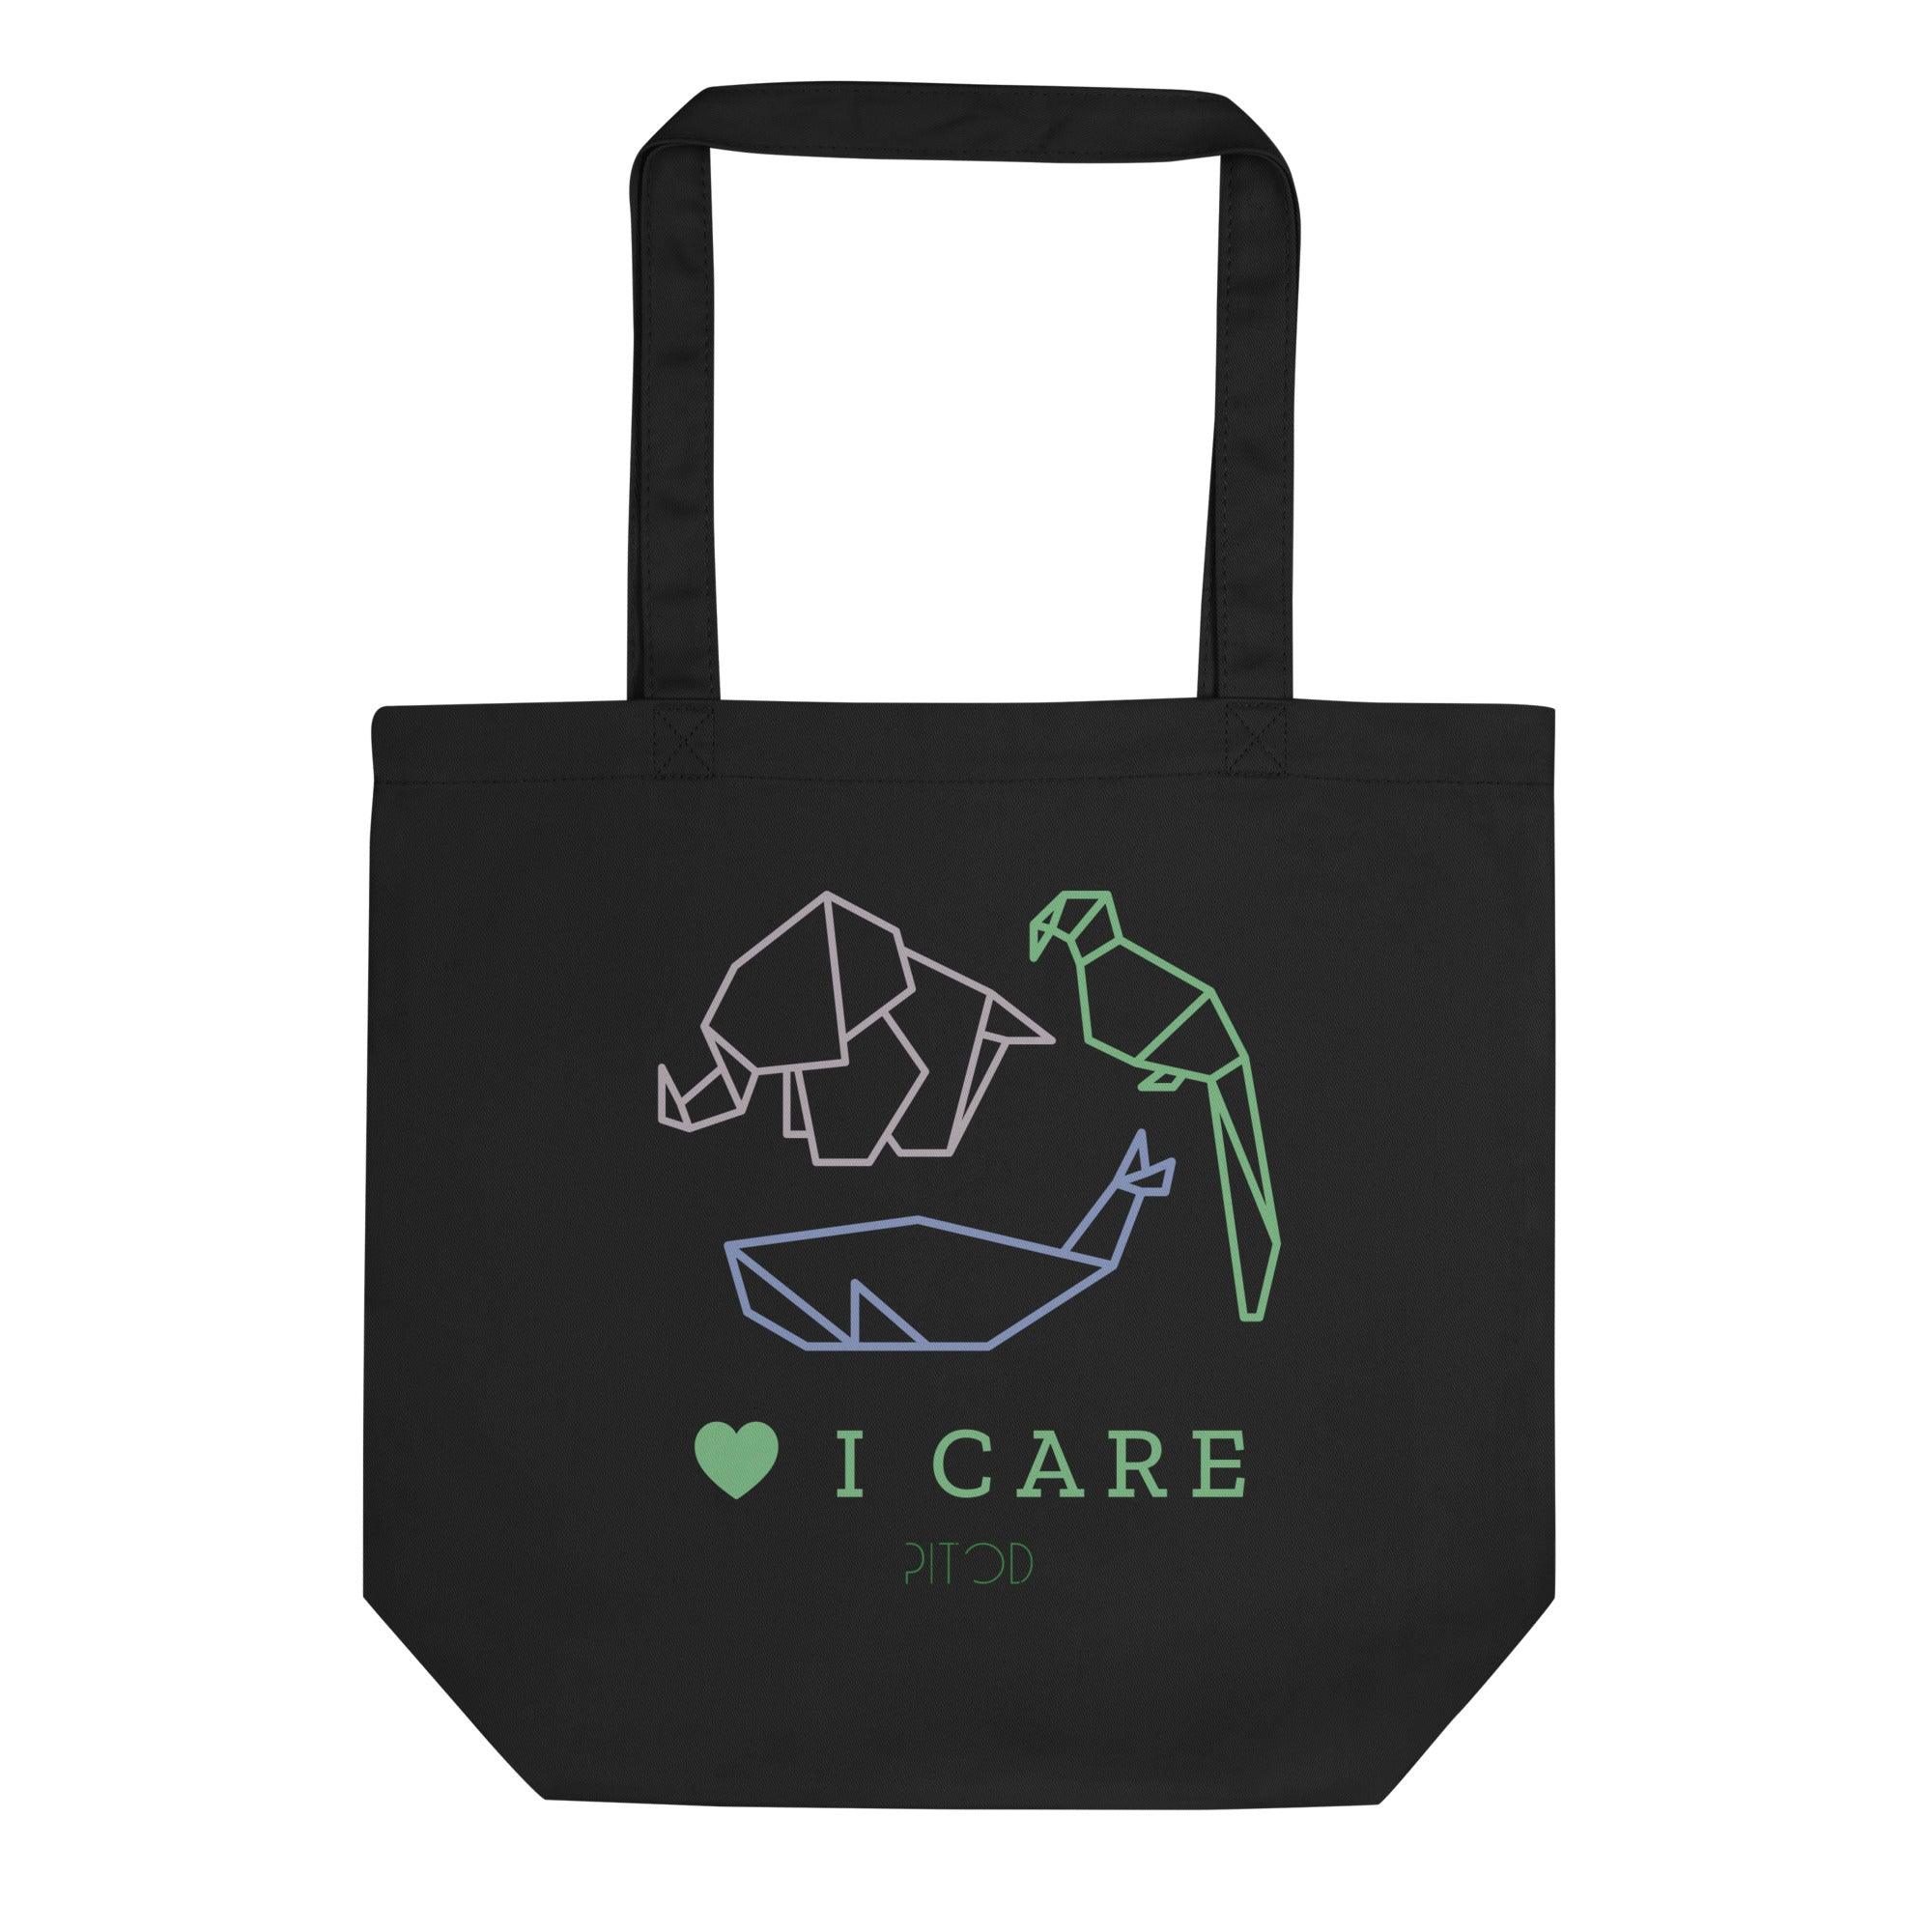 I Care Tote Bag | Shopping Totes | pitod.com